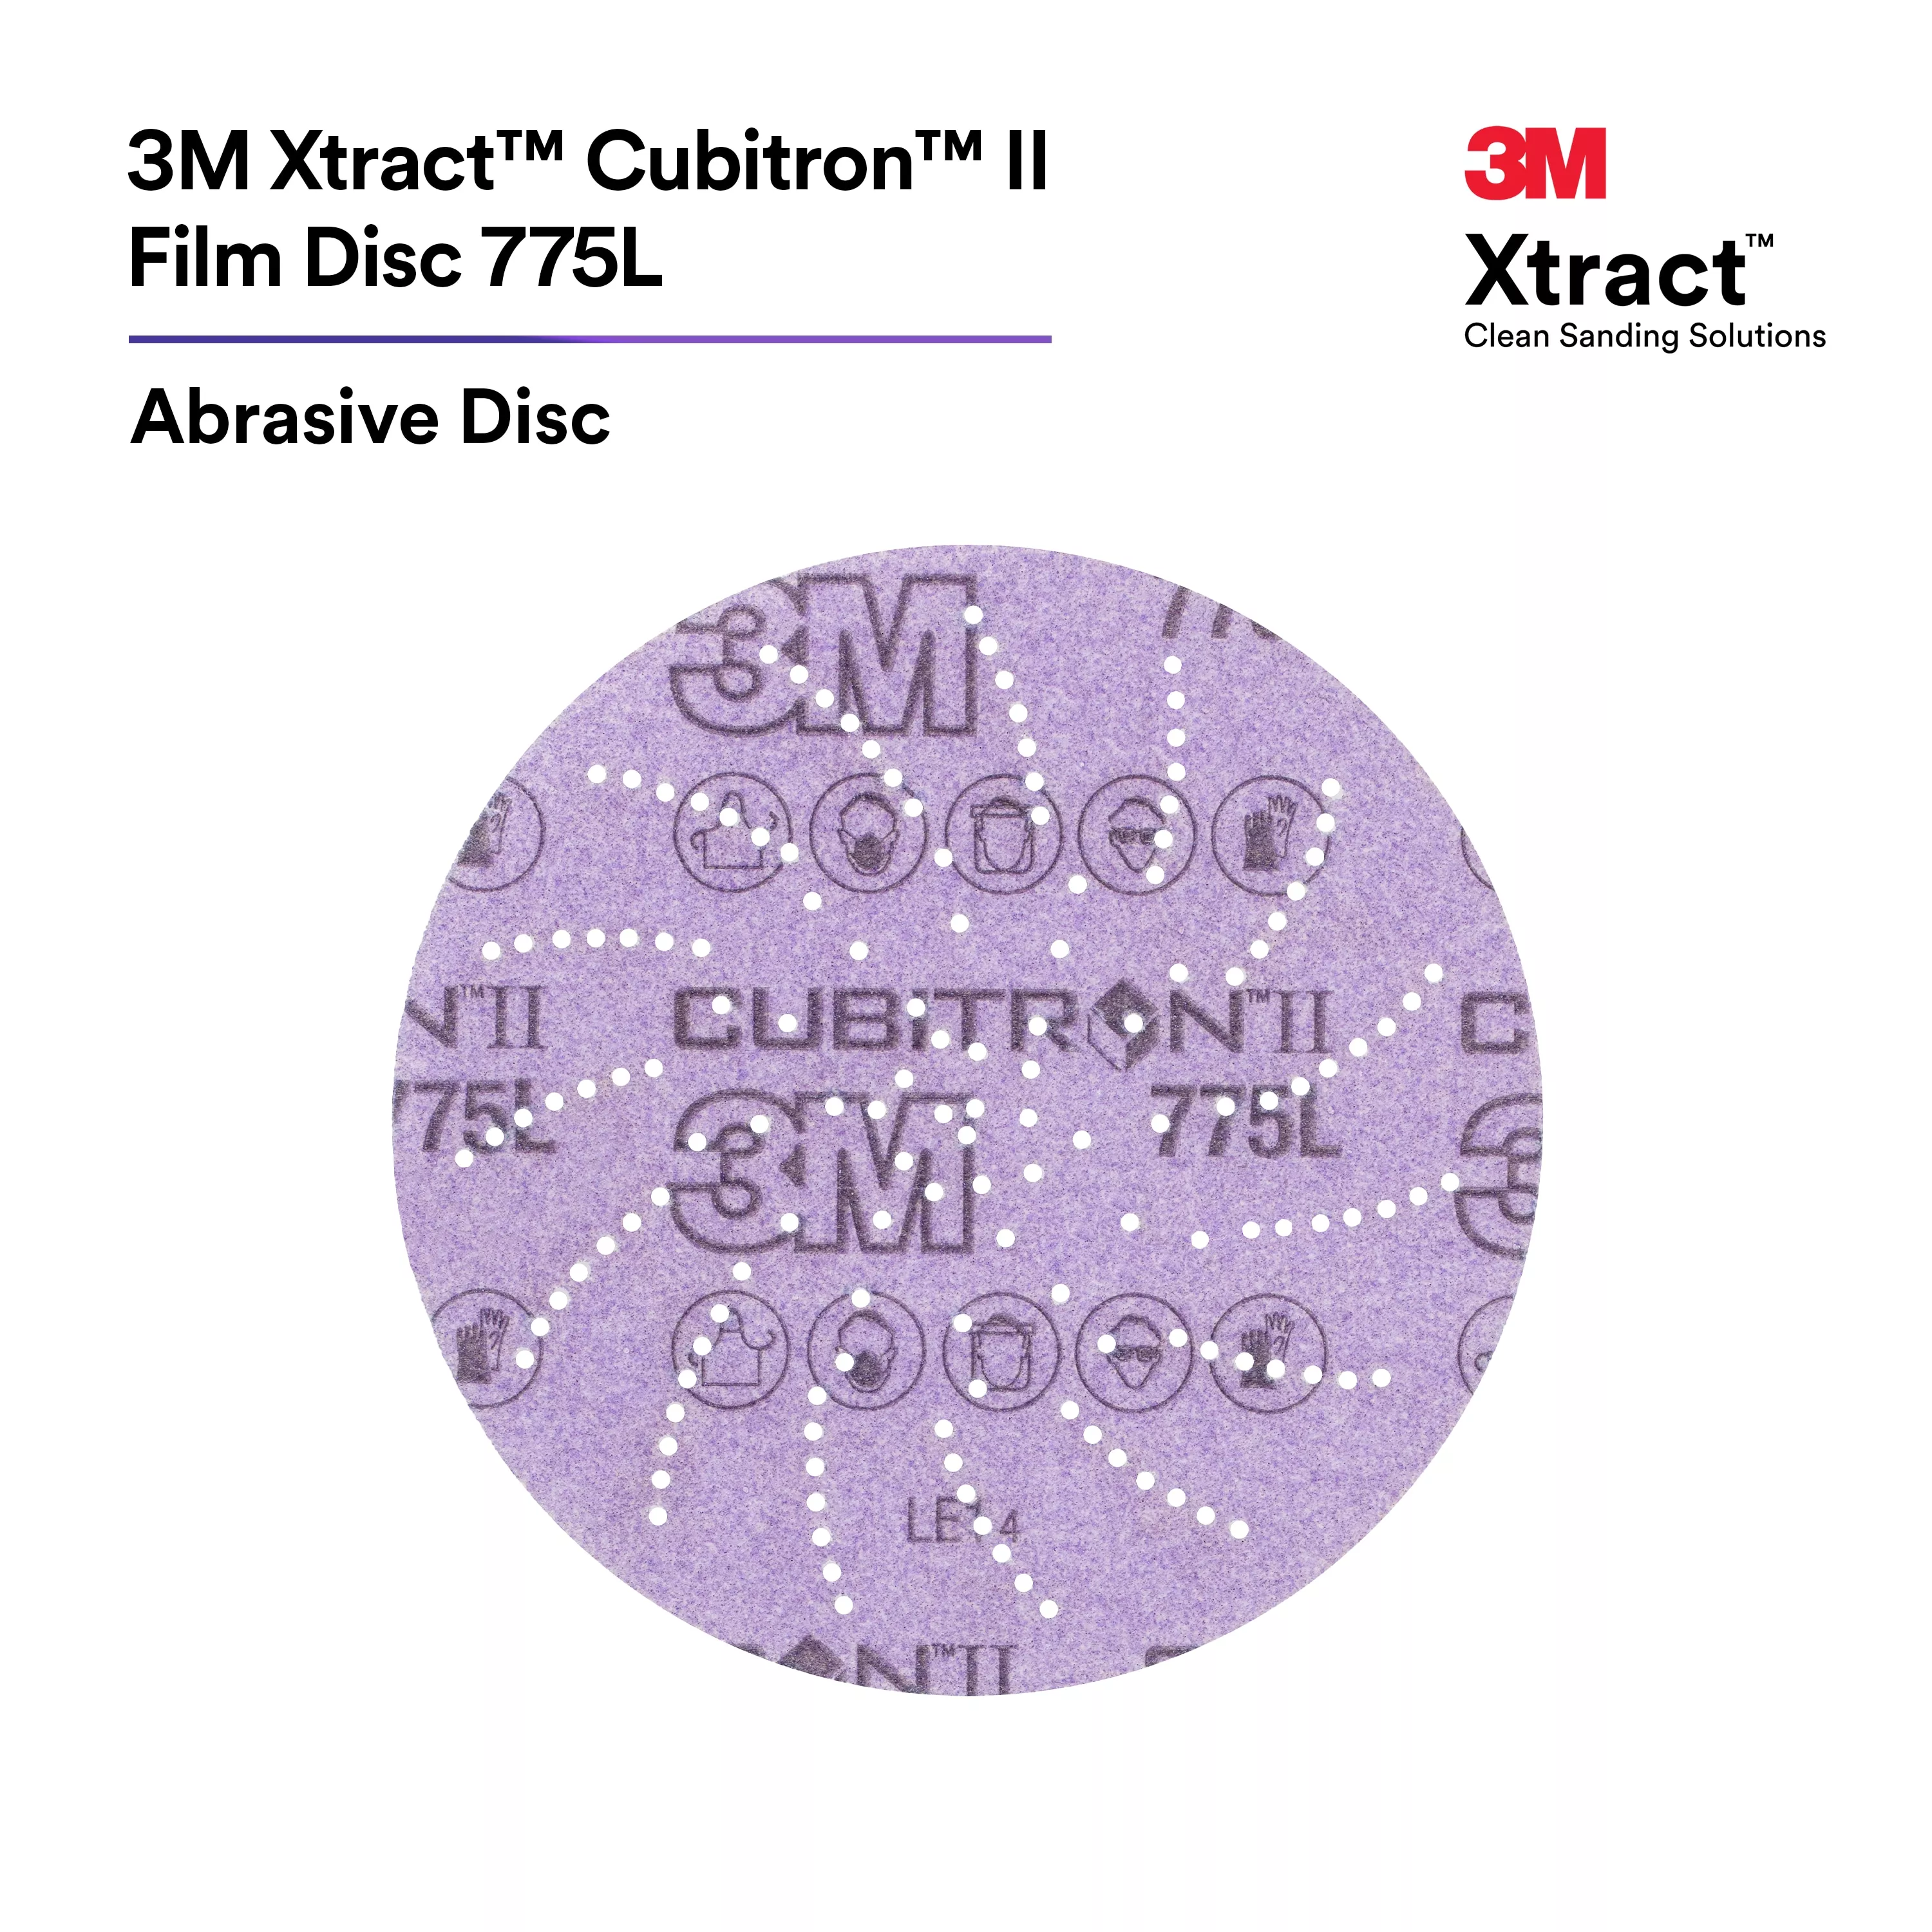 Product Number 775L | 3M Xtract™ Cubitron™ II Film Disc 775L